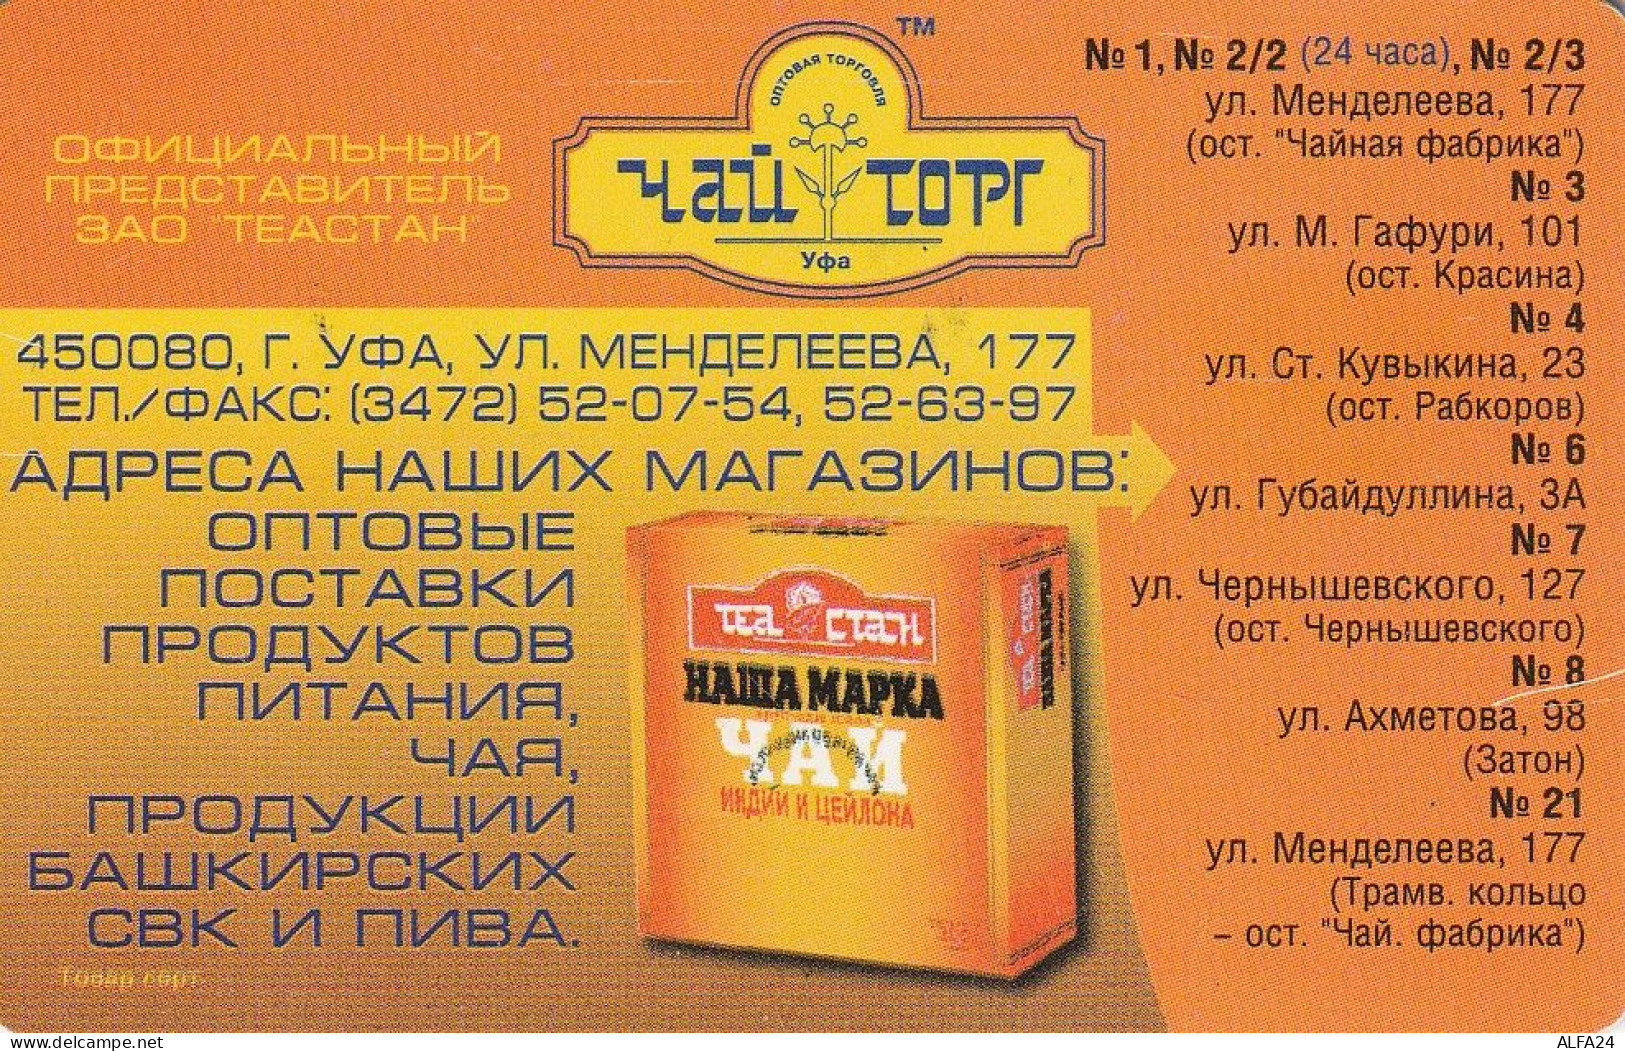 PHONE CARD RUSSIA Bashinformsvyaz - Ufa (E9.2.5 - Russia